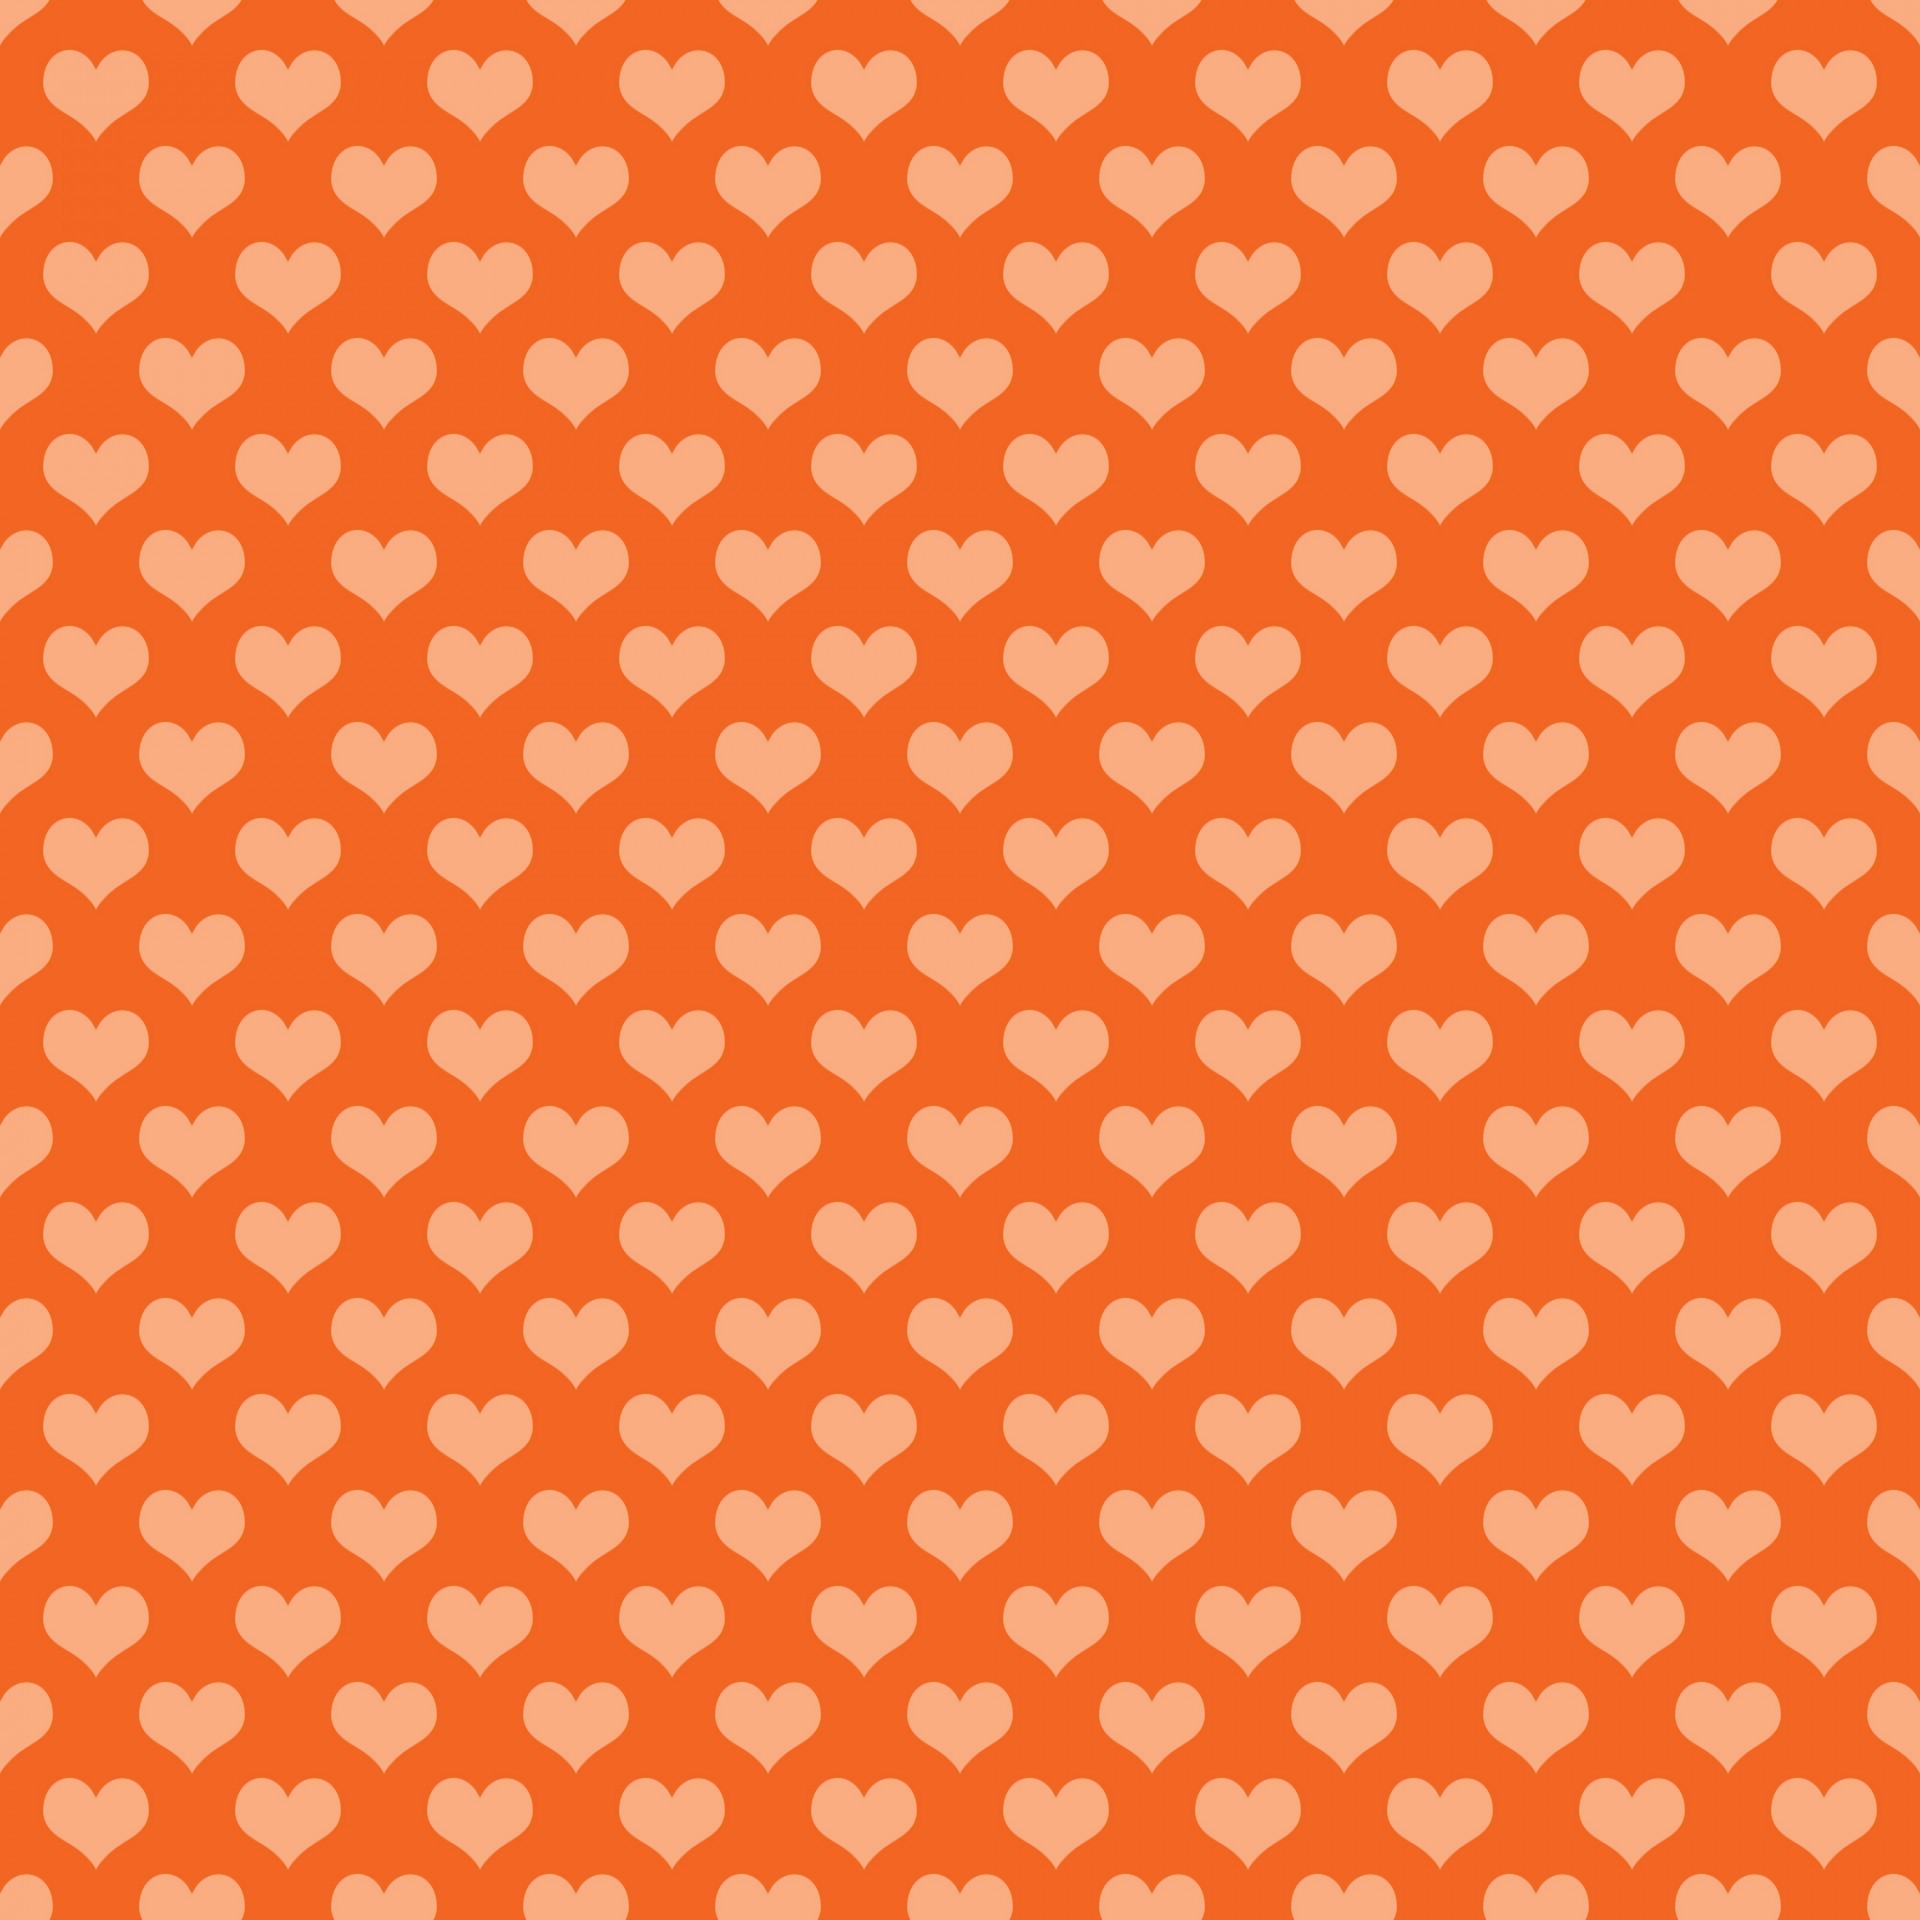 1920x1920 Hearts Background Wallpaper Orange